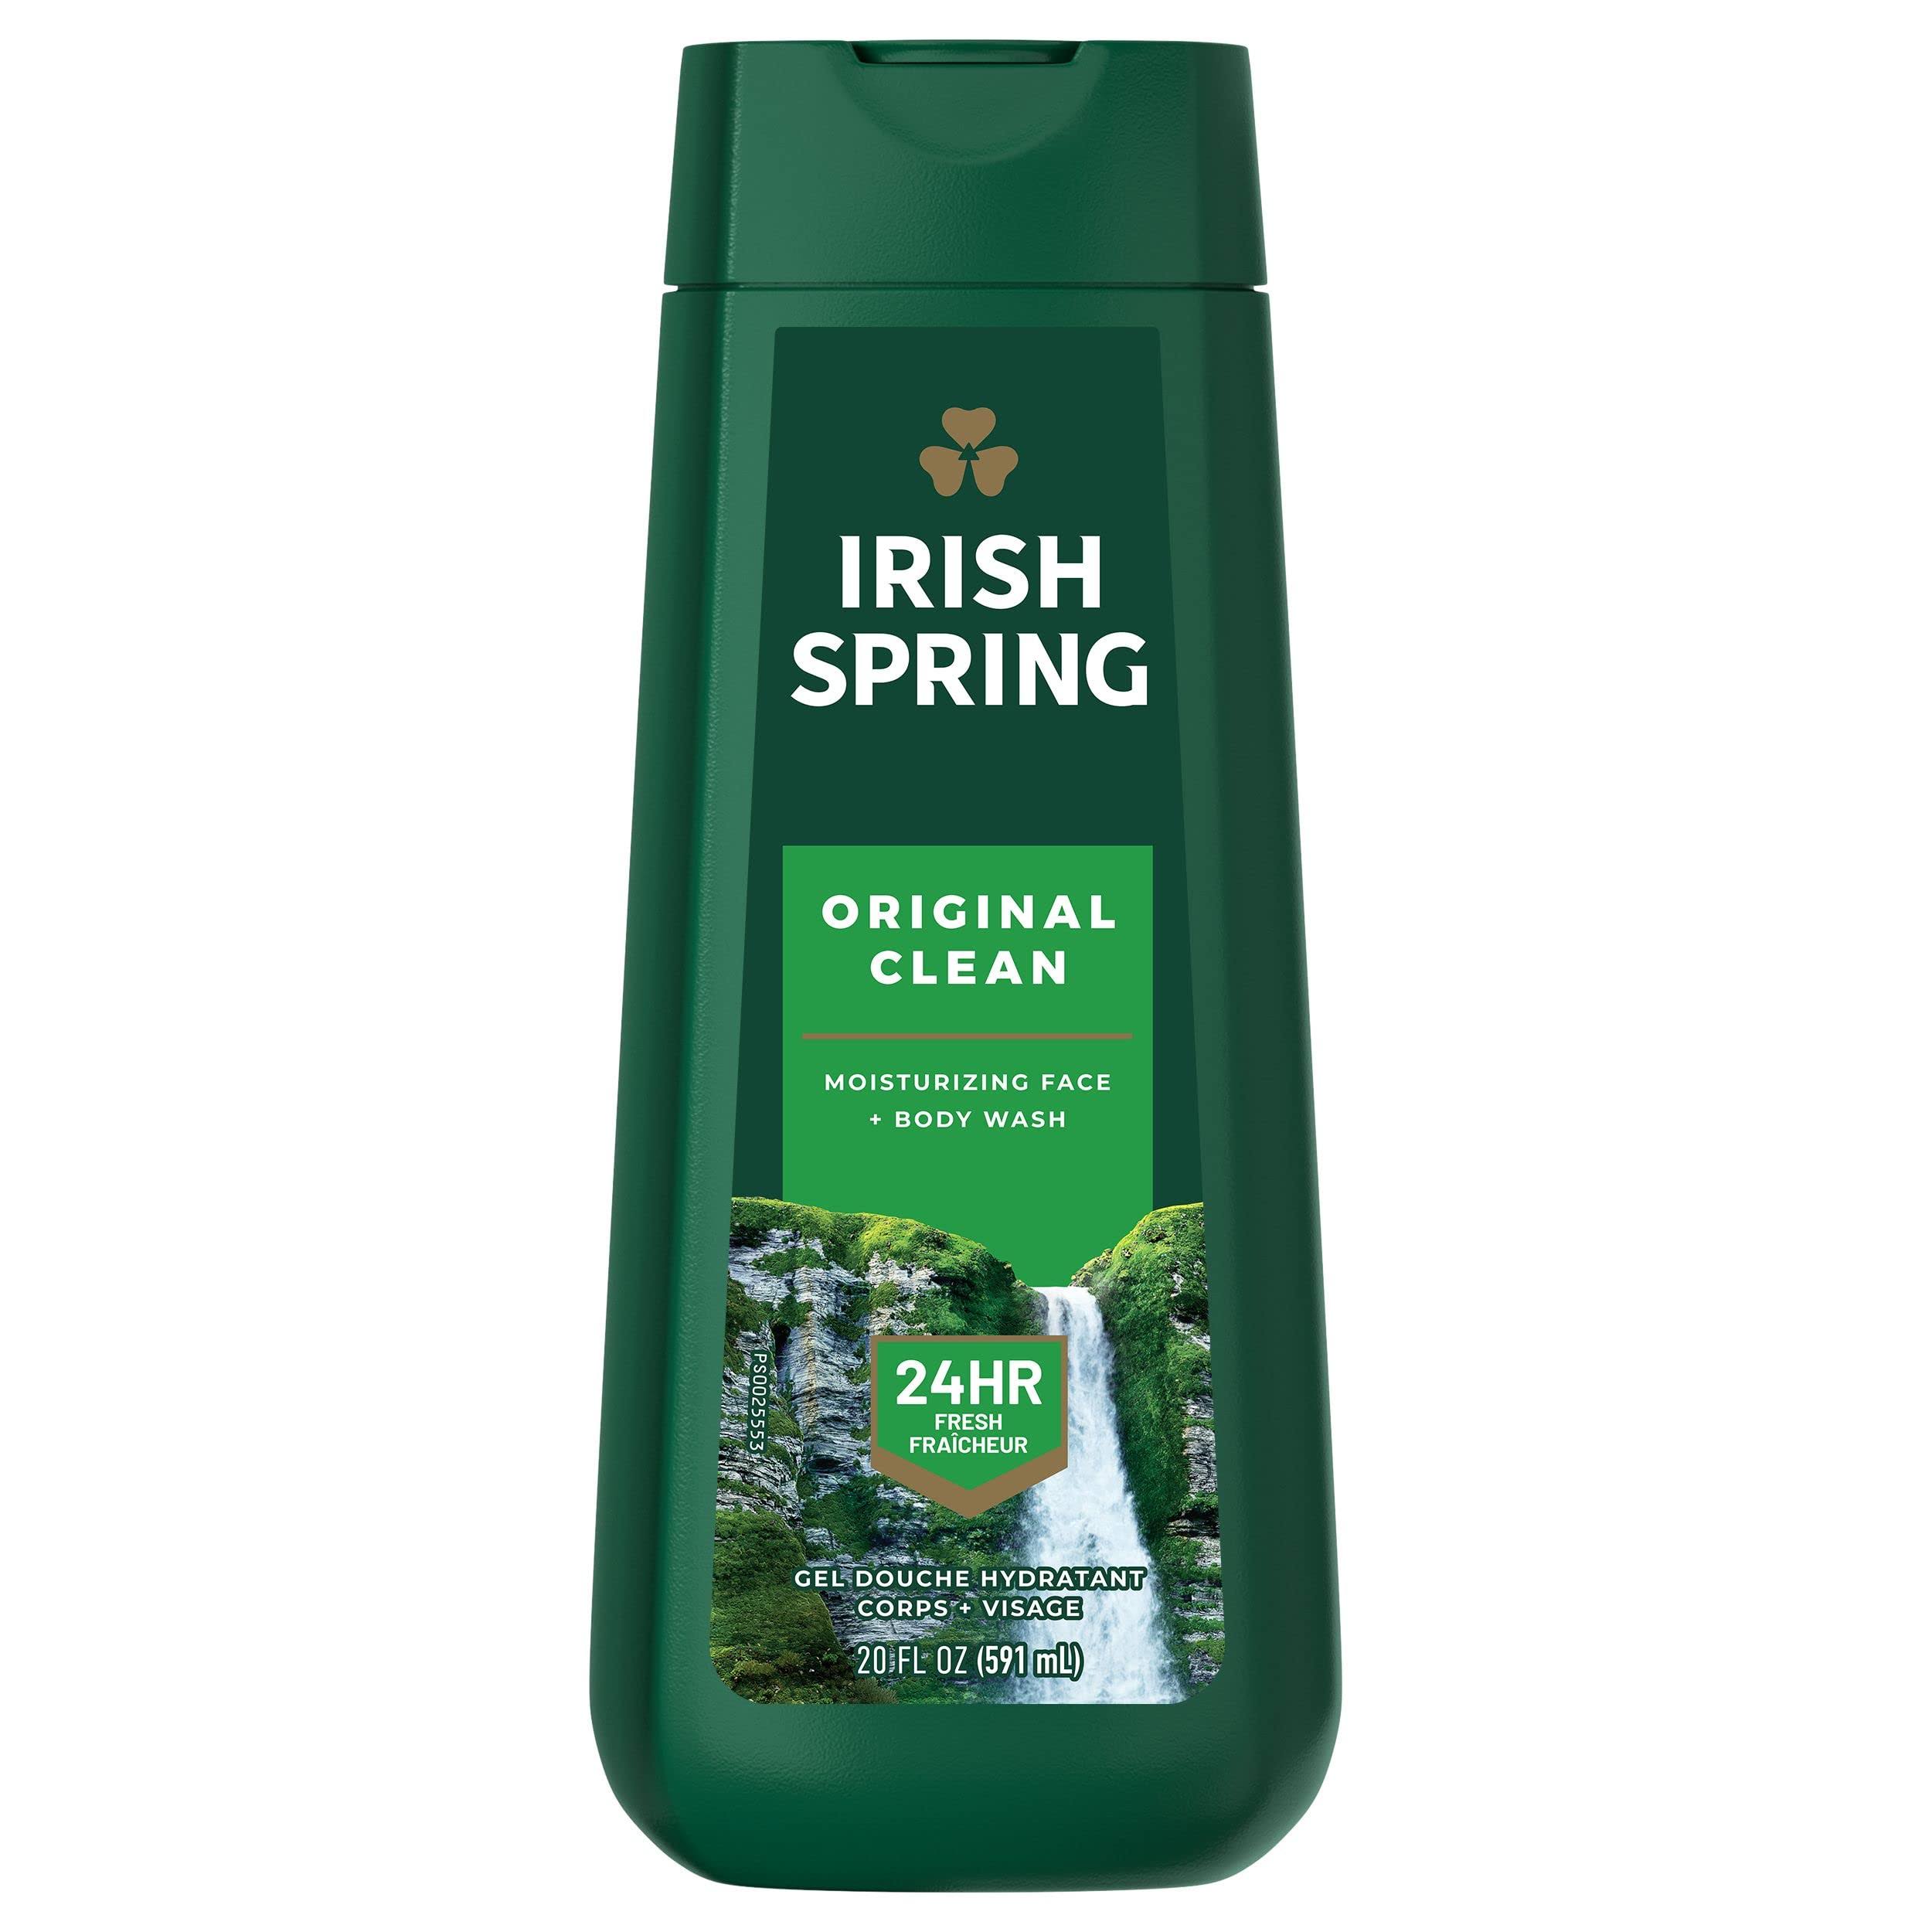 Irish Spring Original Clean Moisturizing Face and Body Wash, 20 fl. oz.